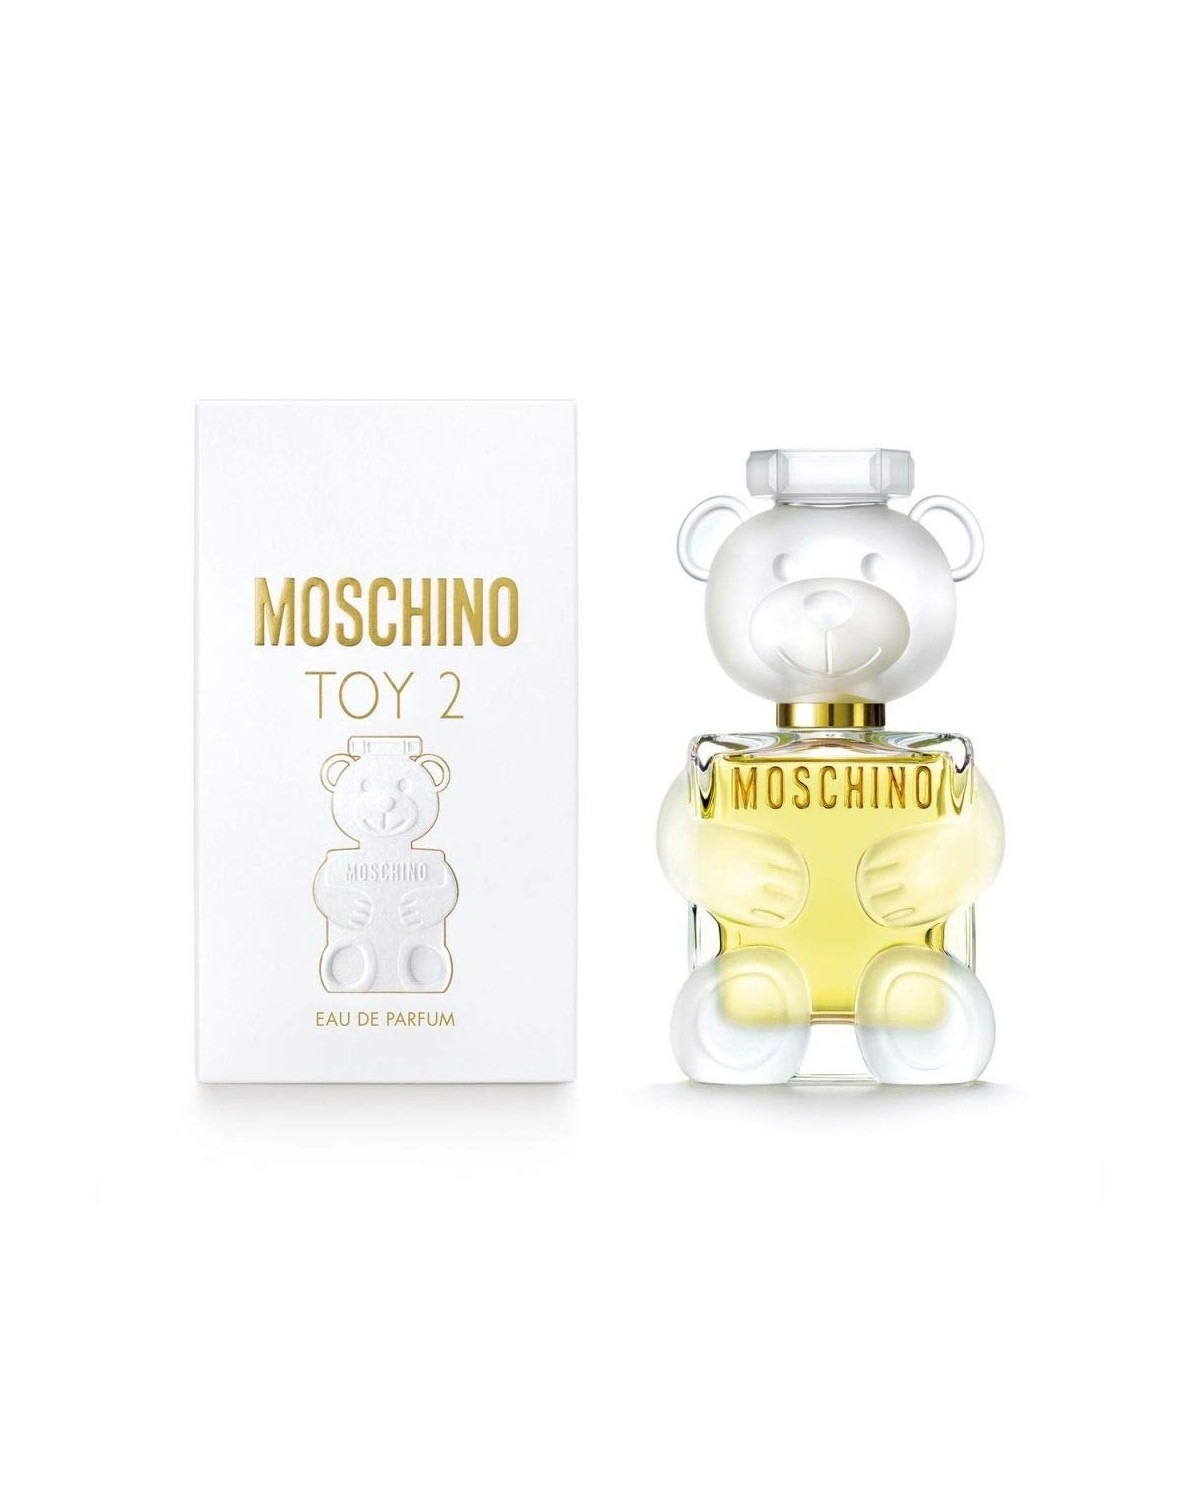 Perfume Toy2 Moschino